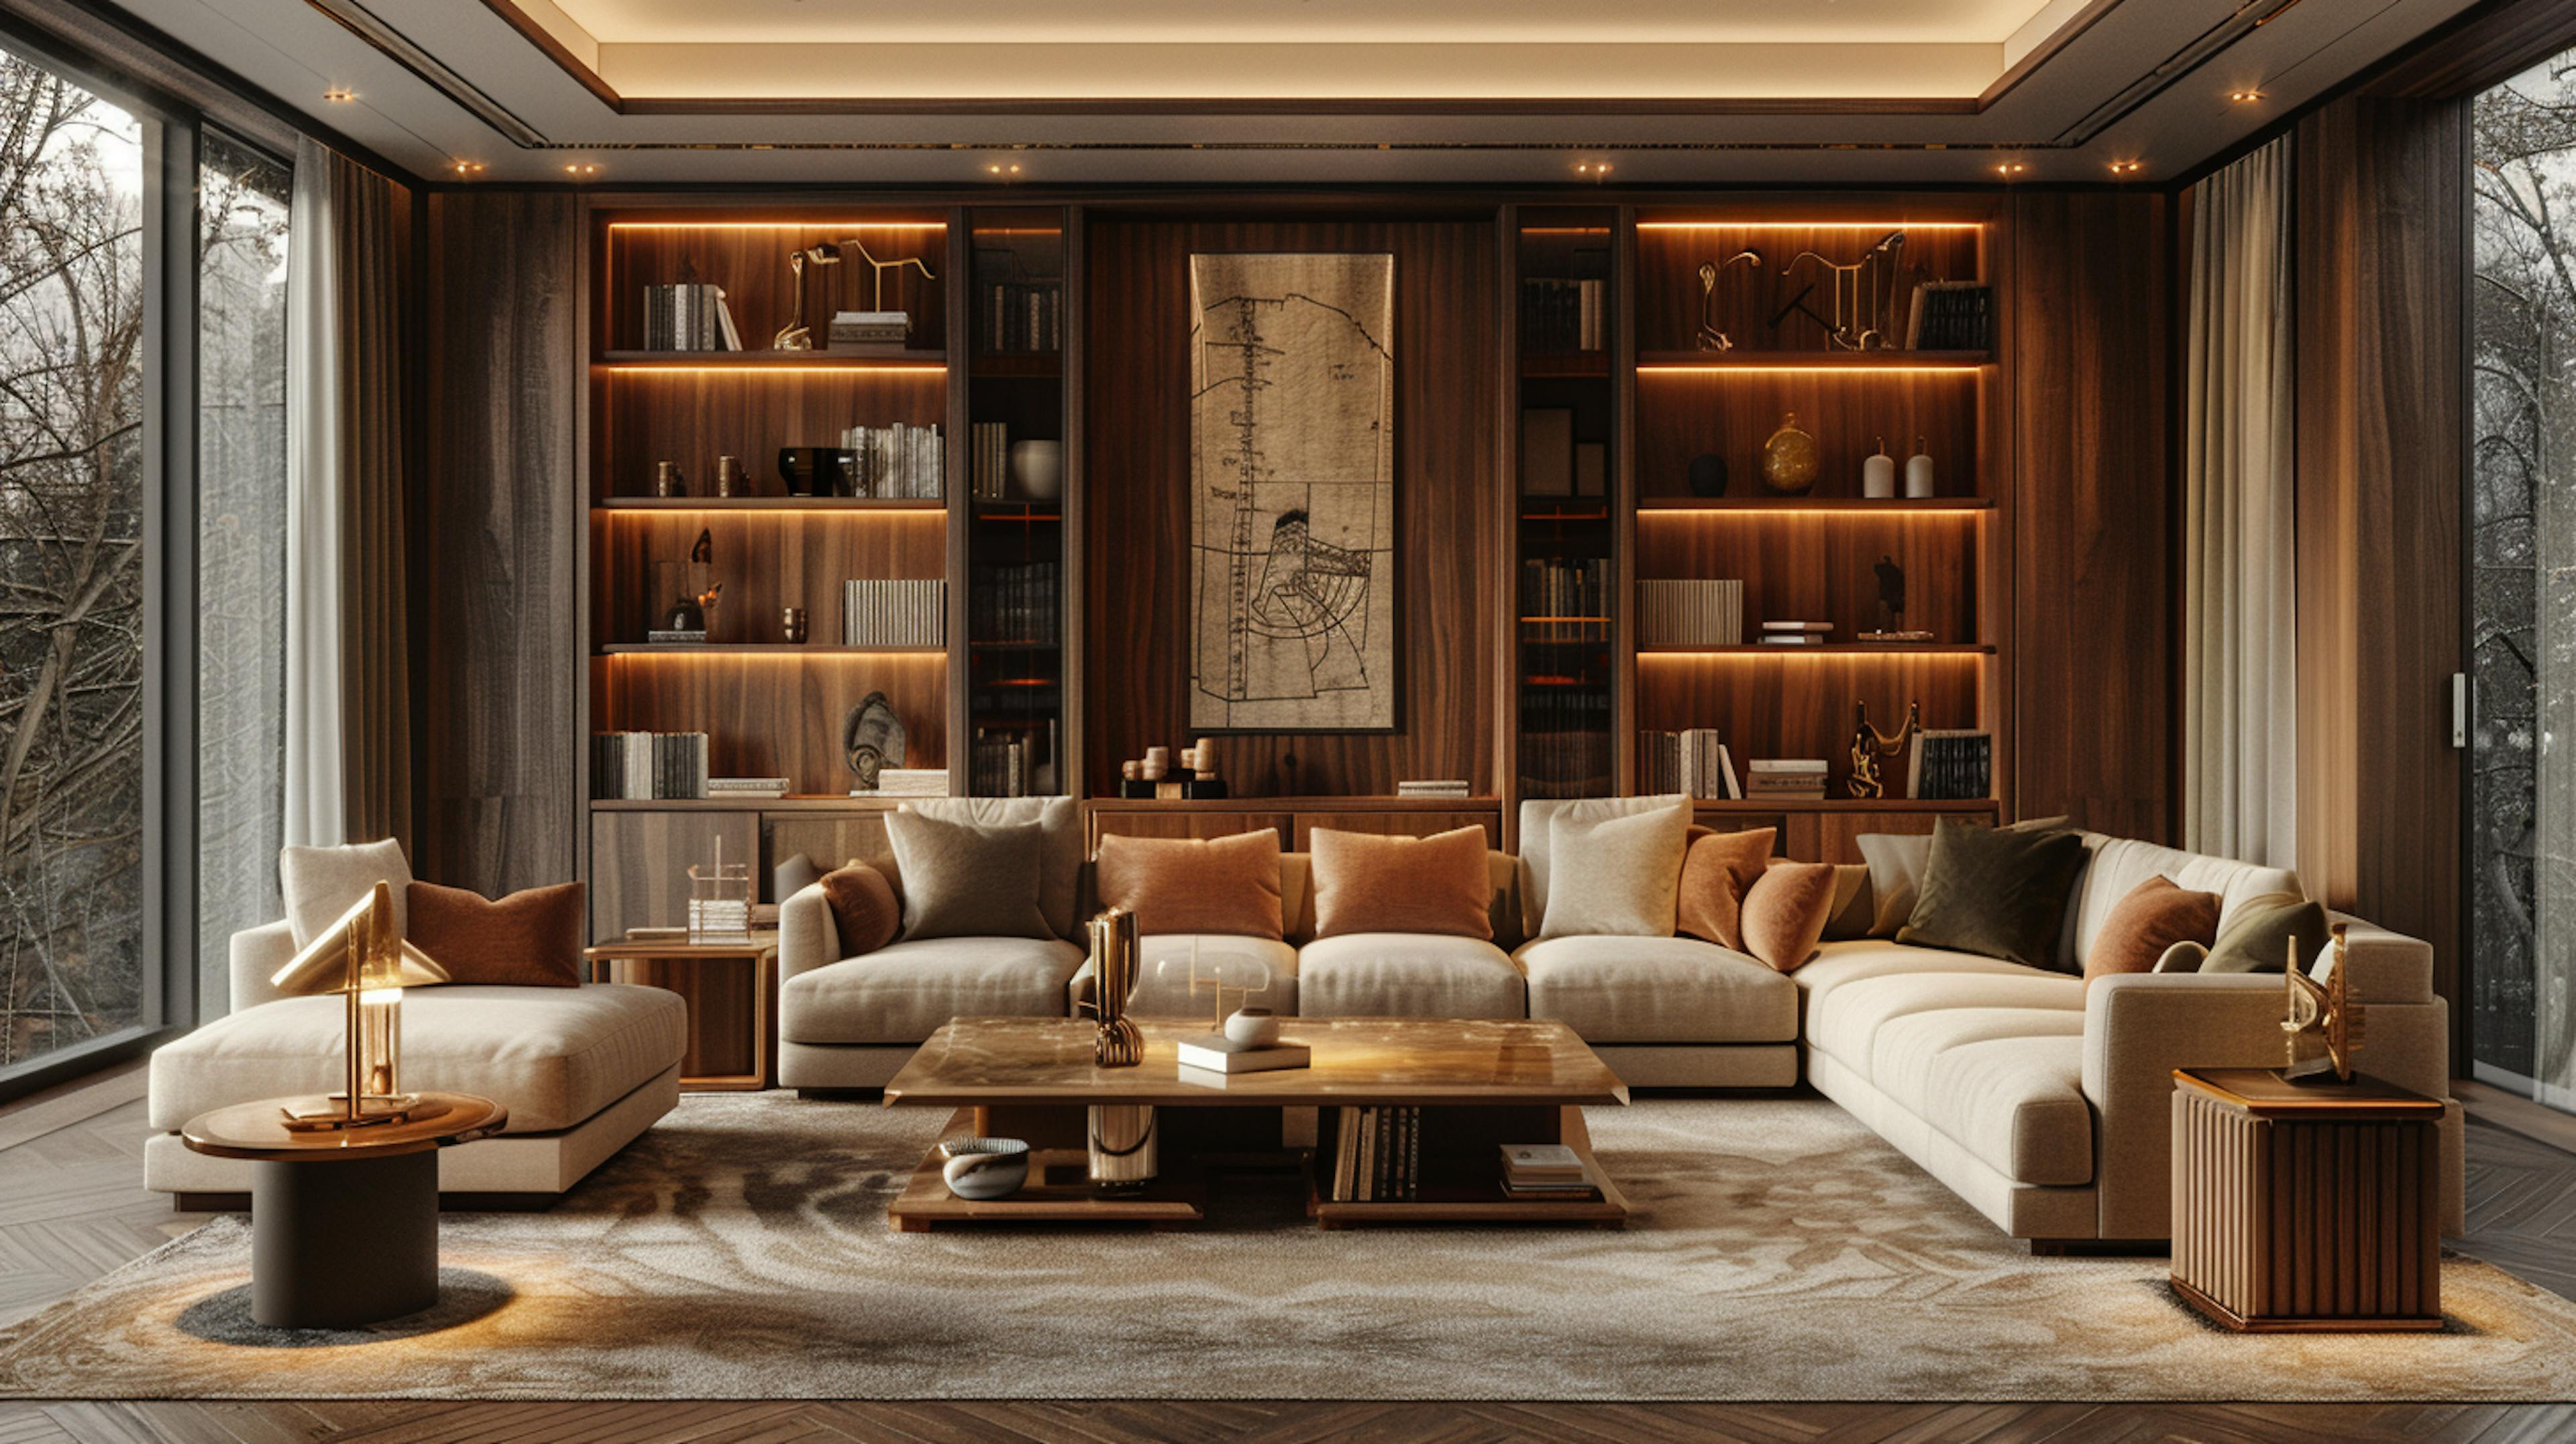 Modern living space with designer furniture and custom shelving, showcasing contemporary interior design.